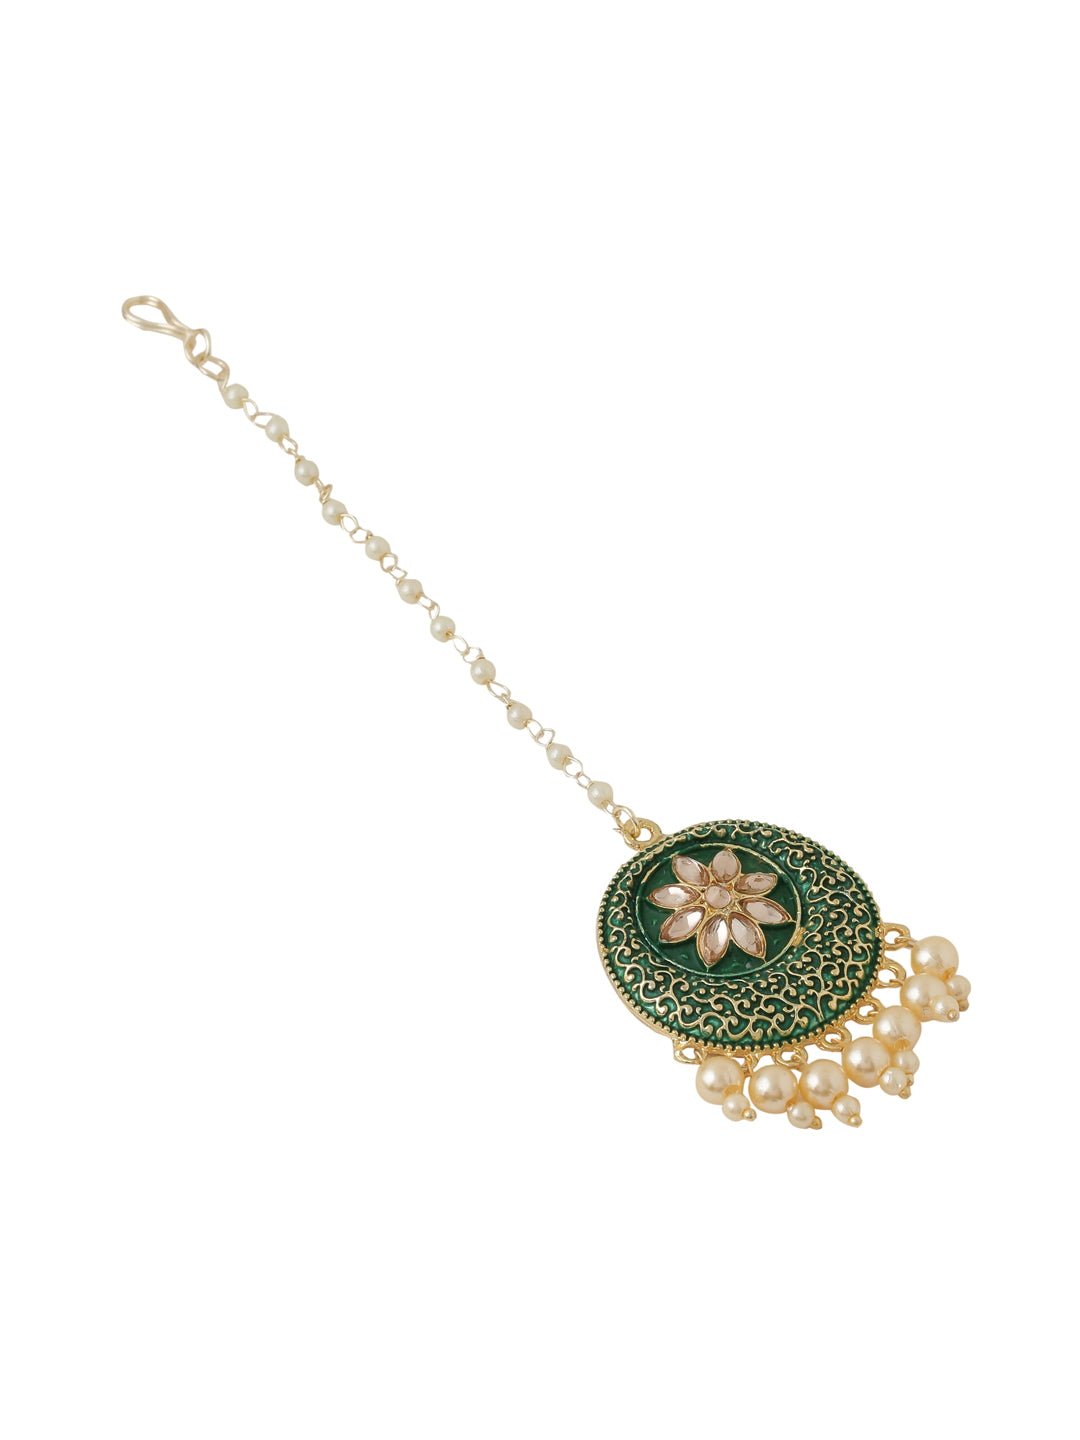 green-enameled-choker-necklace-set-with-maang-tikka-viraasi